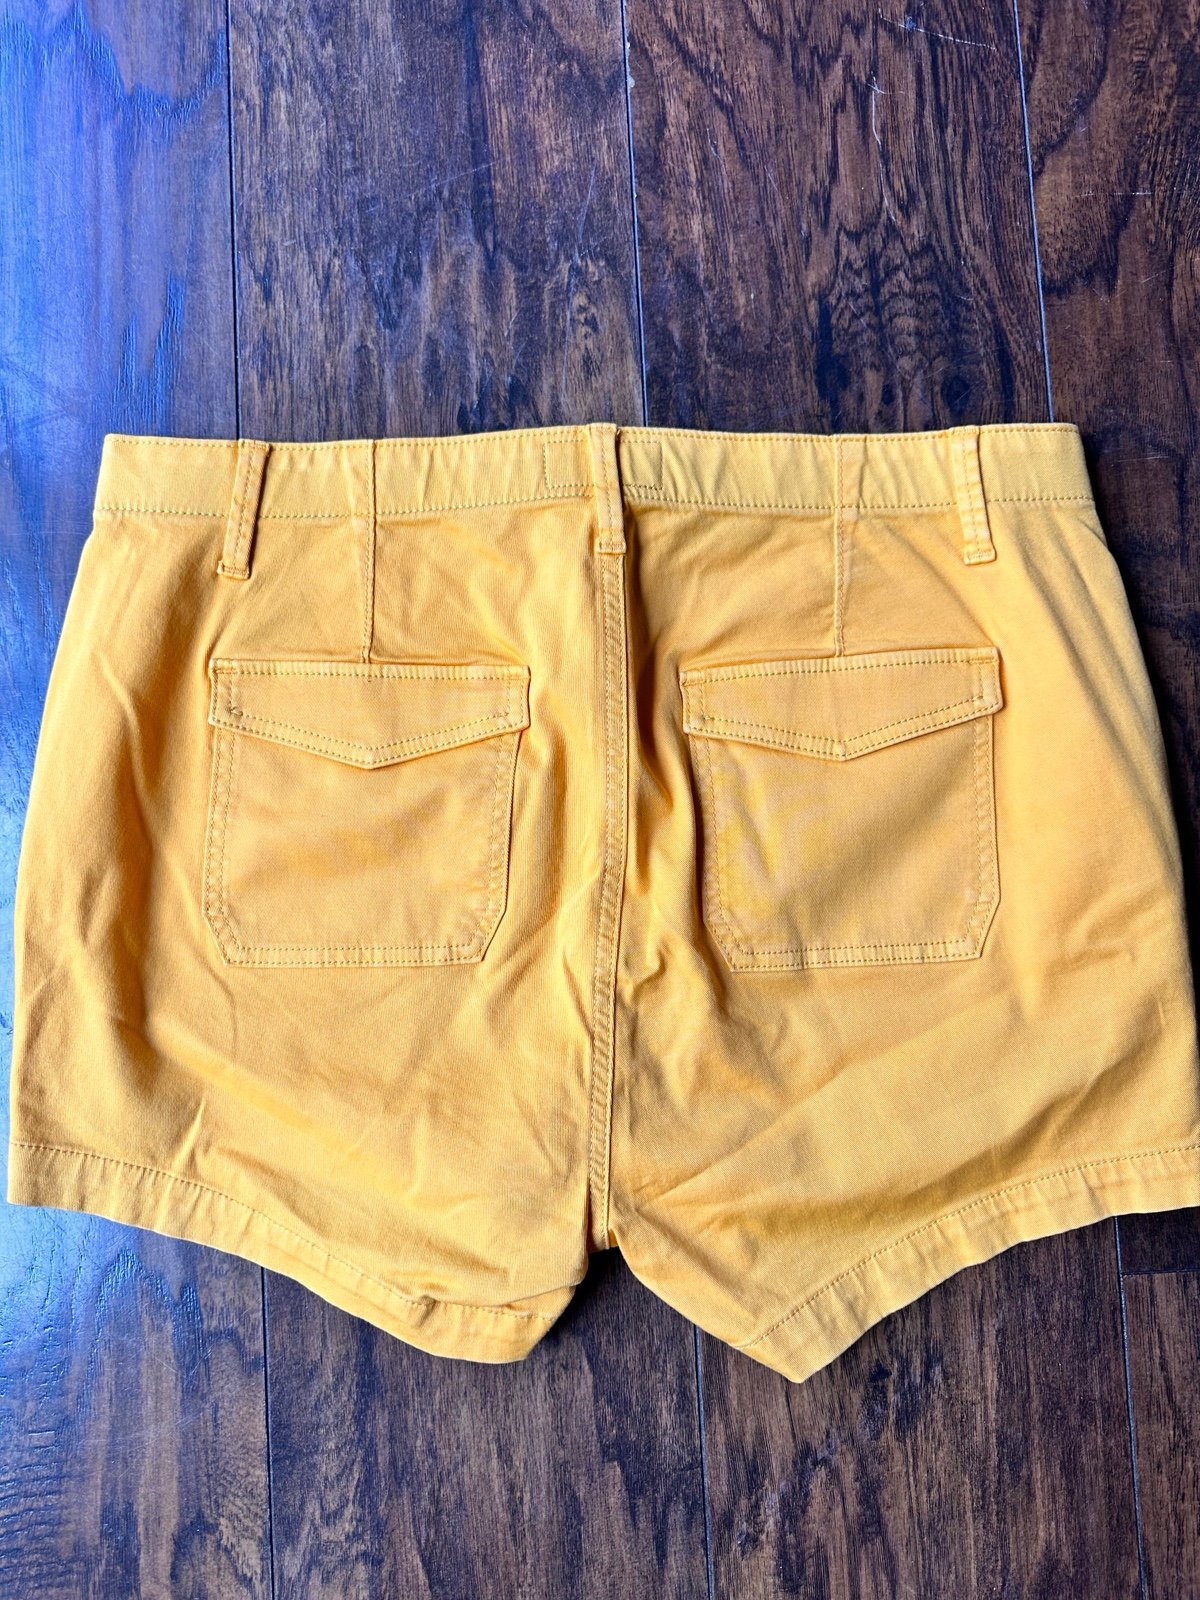 Promotions  Yellow Shorts iJfReXbKx on sale